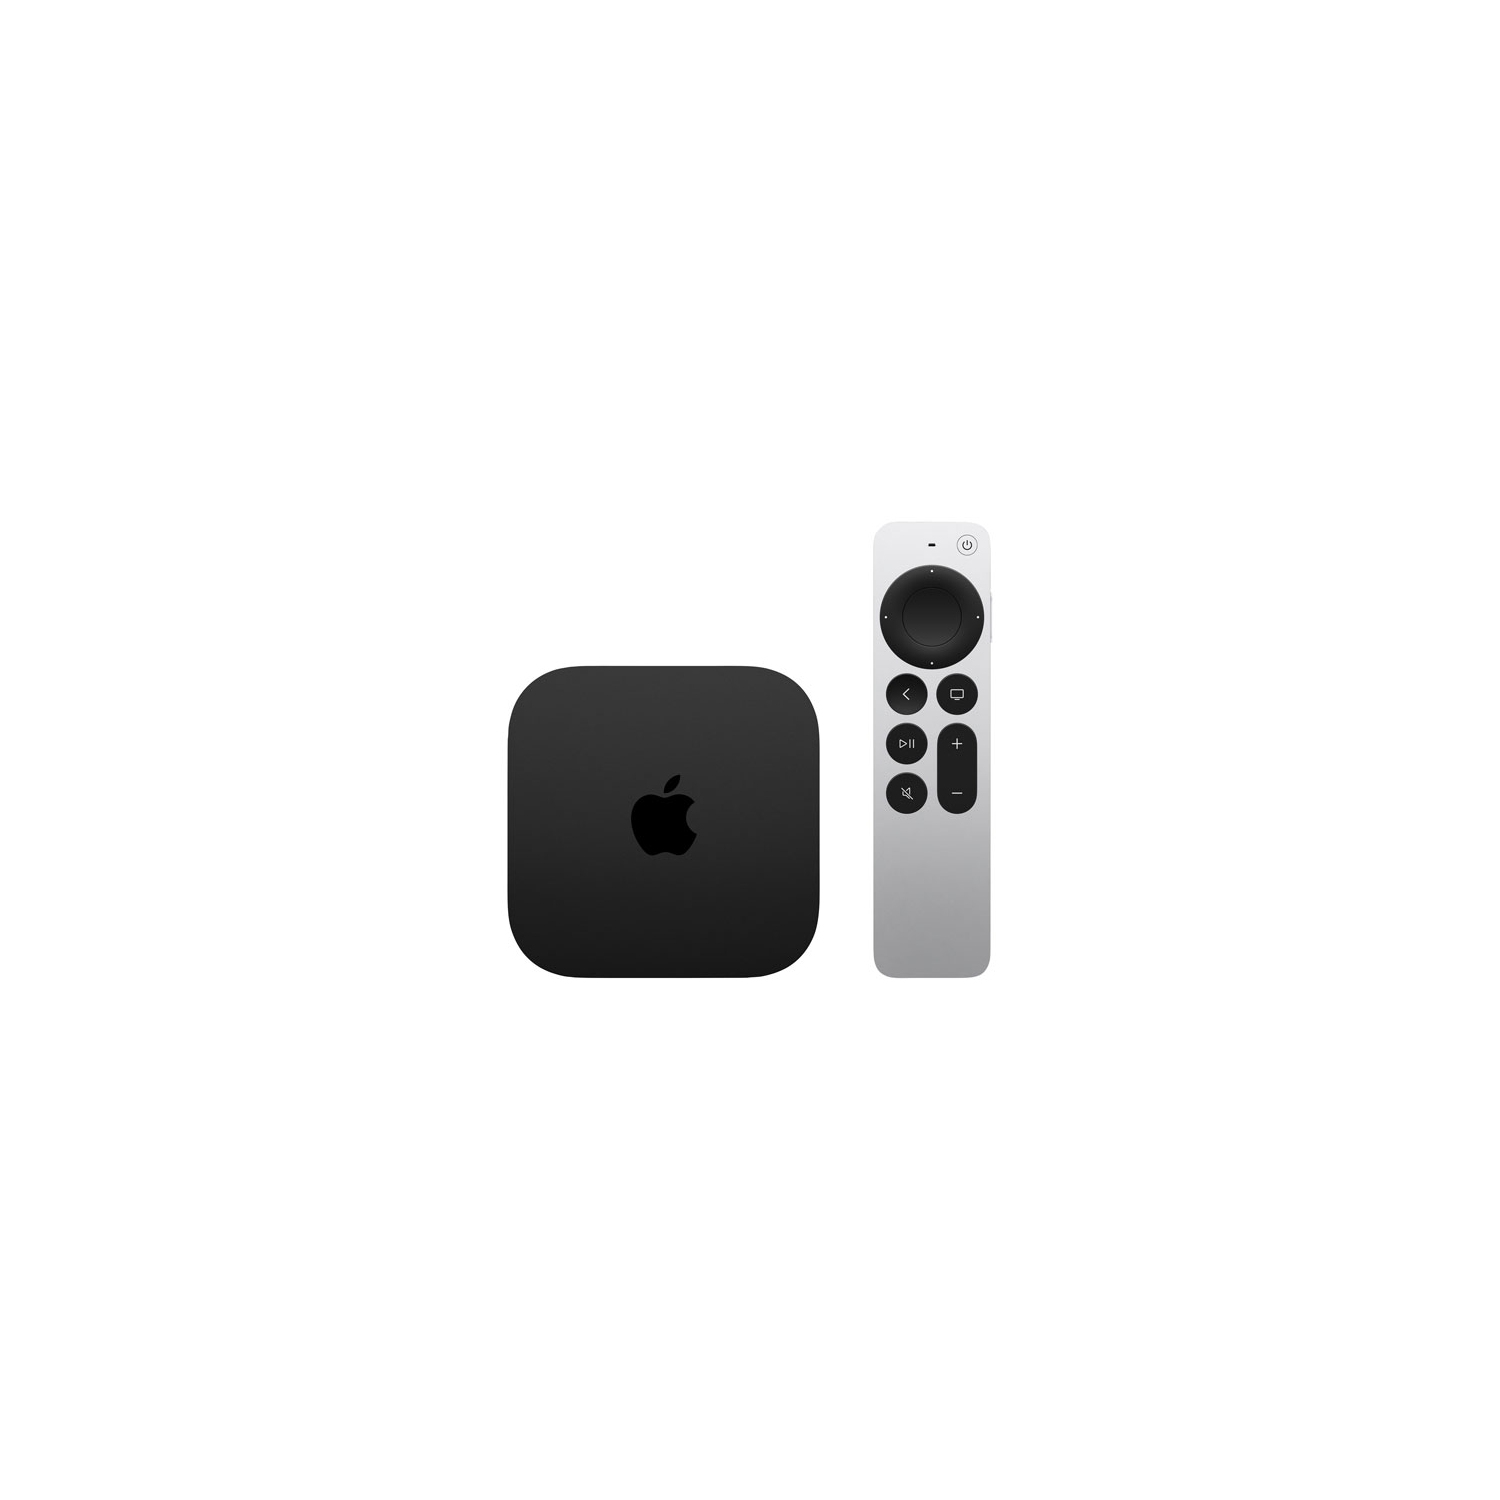 Refurbished (Good) - Apple TV 4K 64GB with Wi-Fi (3rd Generation)